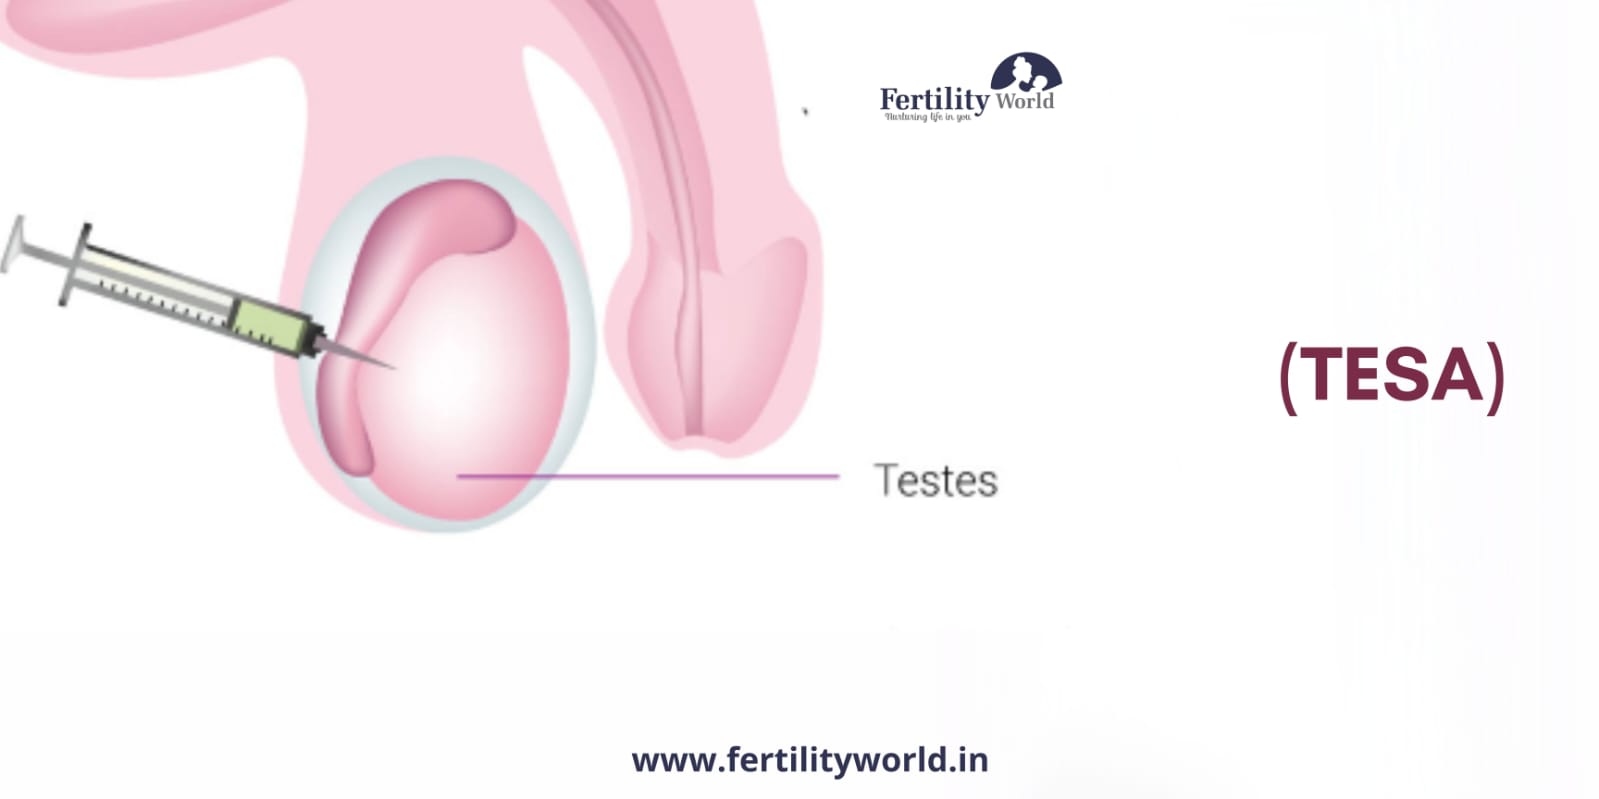 Testicular Sperm Aspiration (TESA) in the Philippines